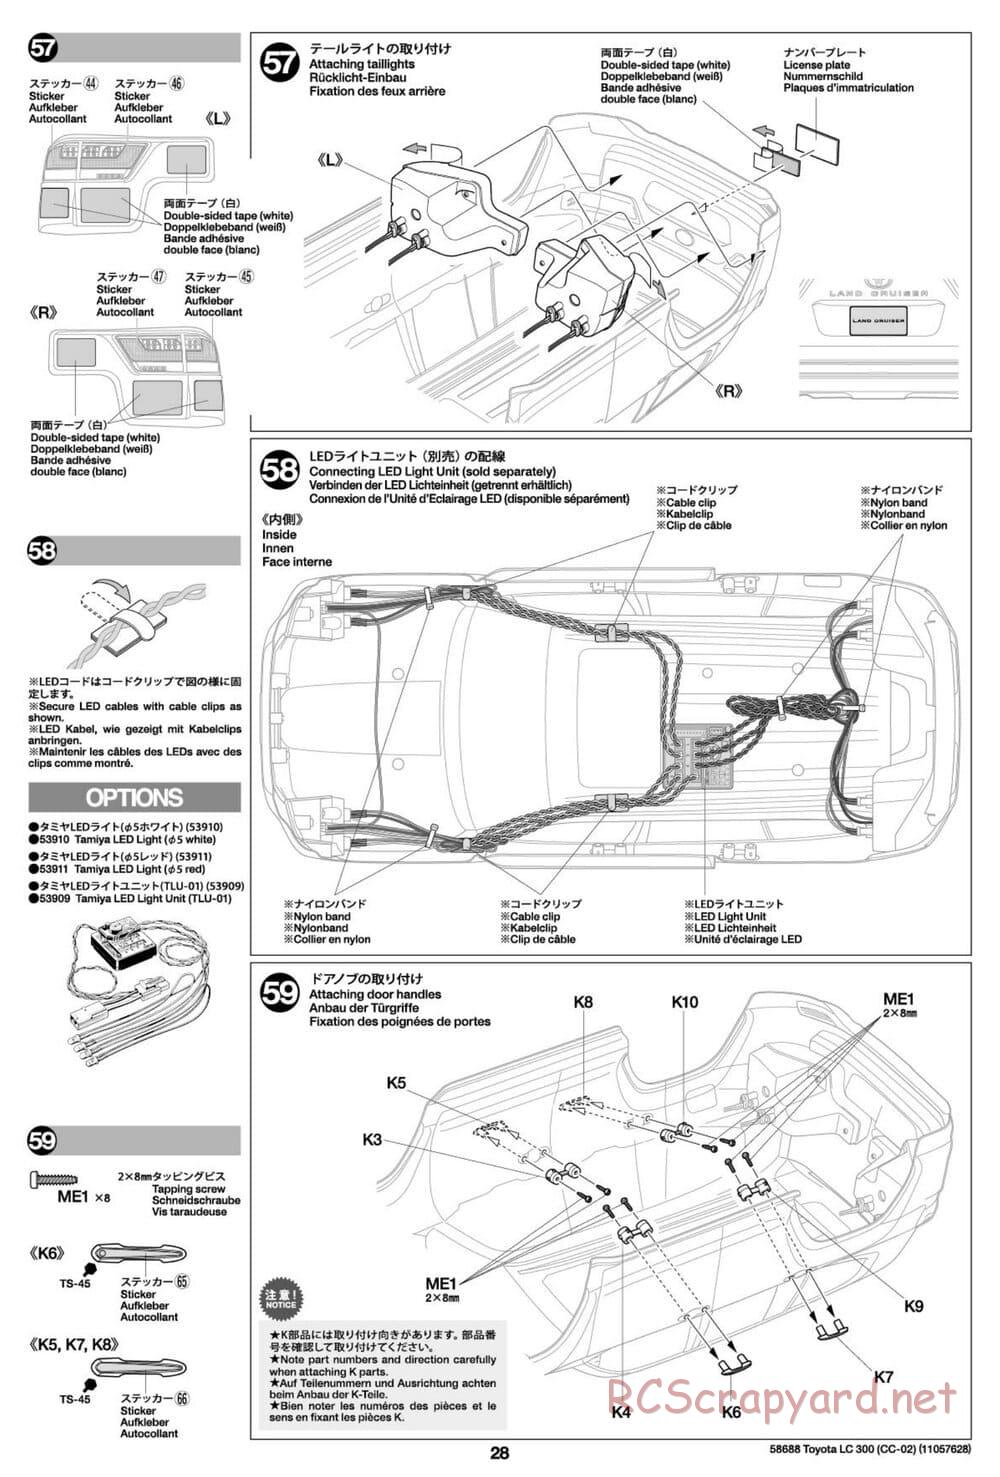 Tamiya - Toyota Land Cruiser 300 - CC-02 Chassis - Manual - Page 28